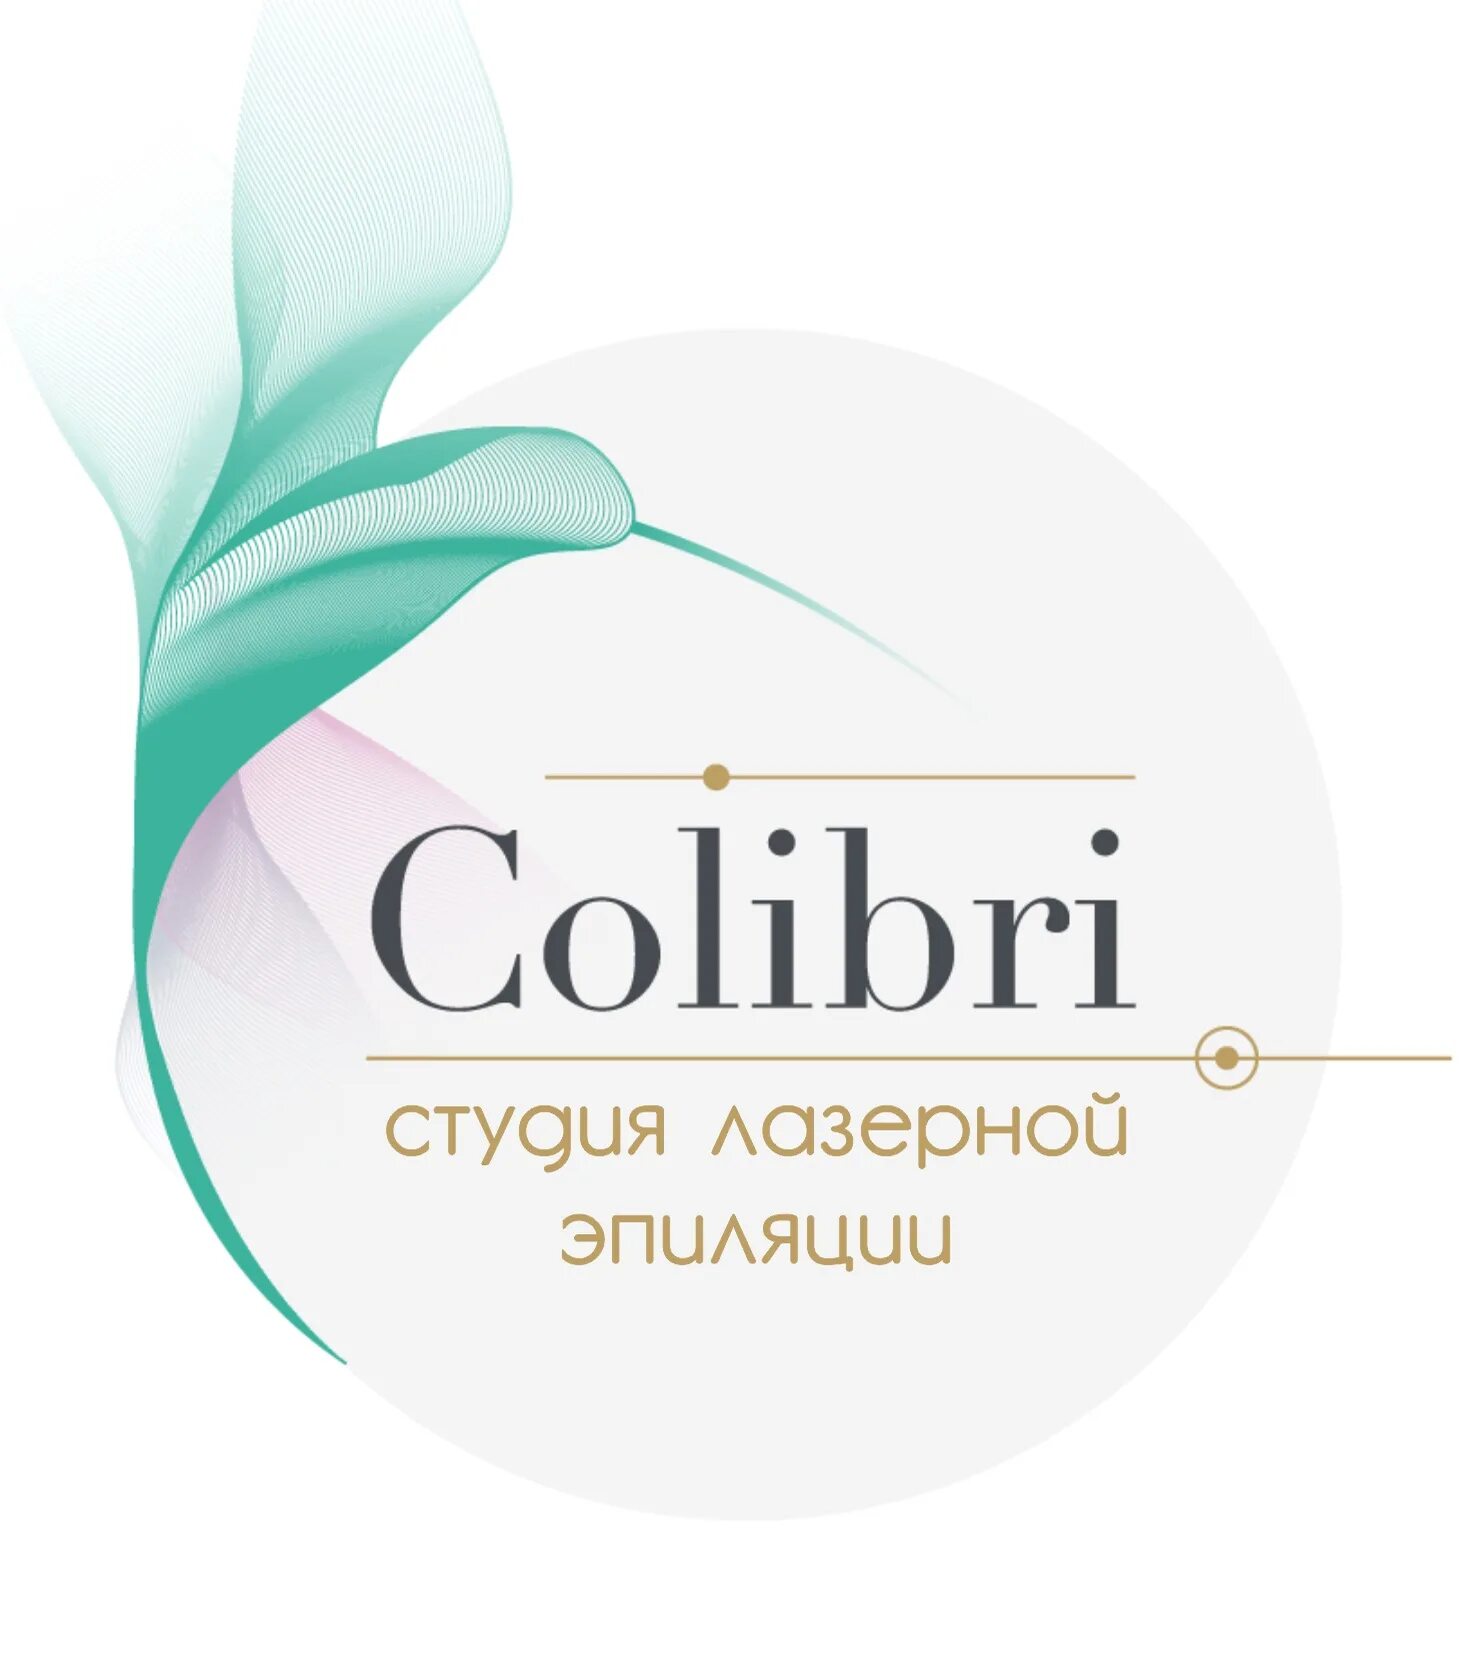 Colibri clean. Колибри логотип. Логотип calibri. Лазерная эпиляция Углич. Печати с логотипом Колибри.